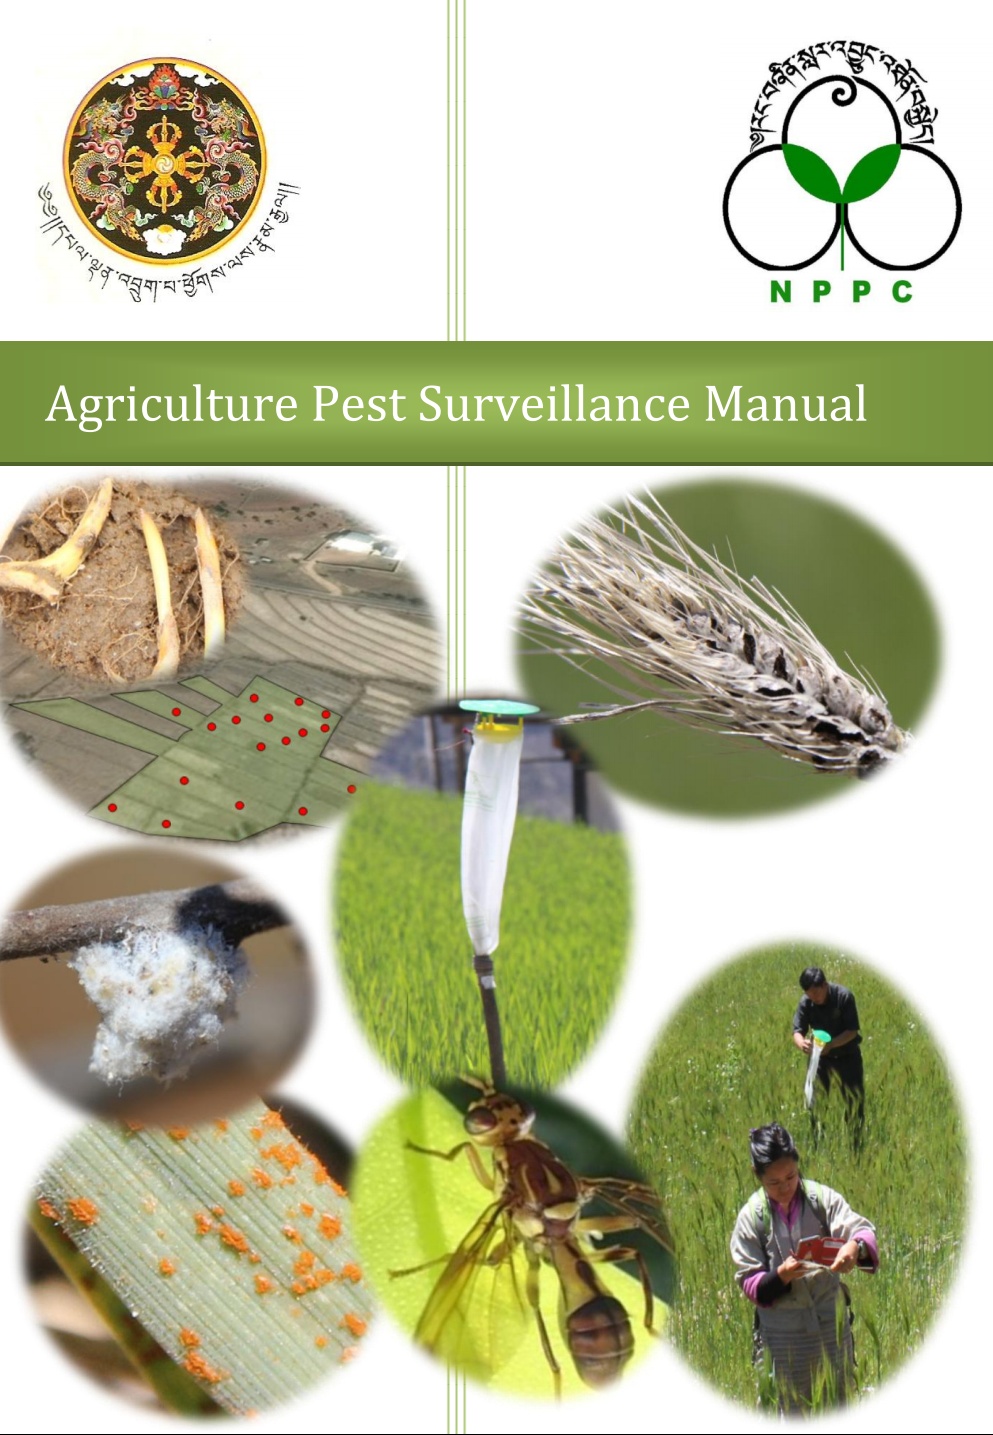 Agriculture Pest Surveillance Manual 2017